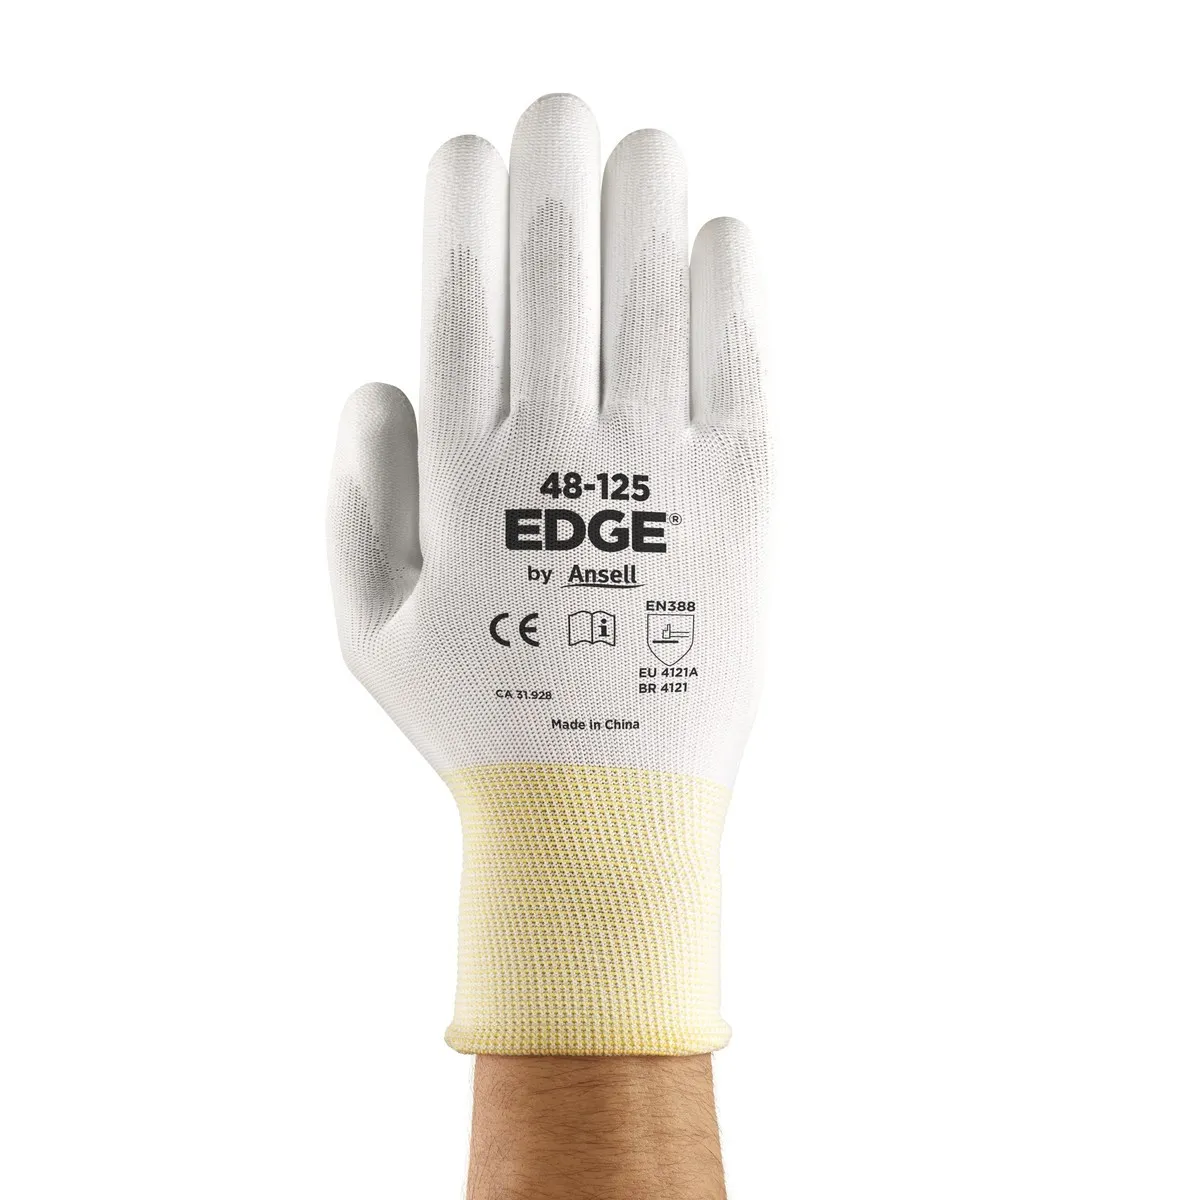 Zaštitne rukavice EDGE 48-125 bela - Ansell - PAR 